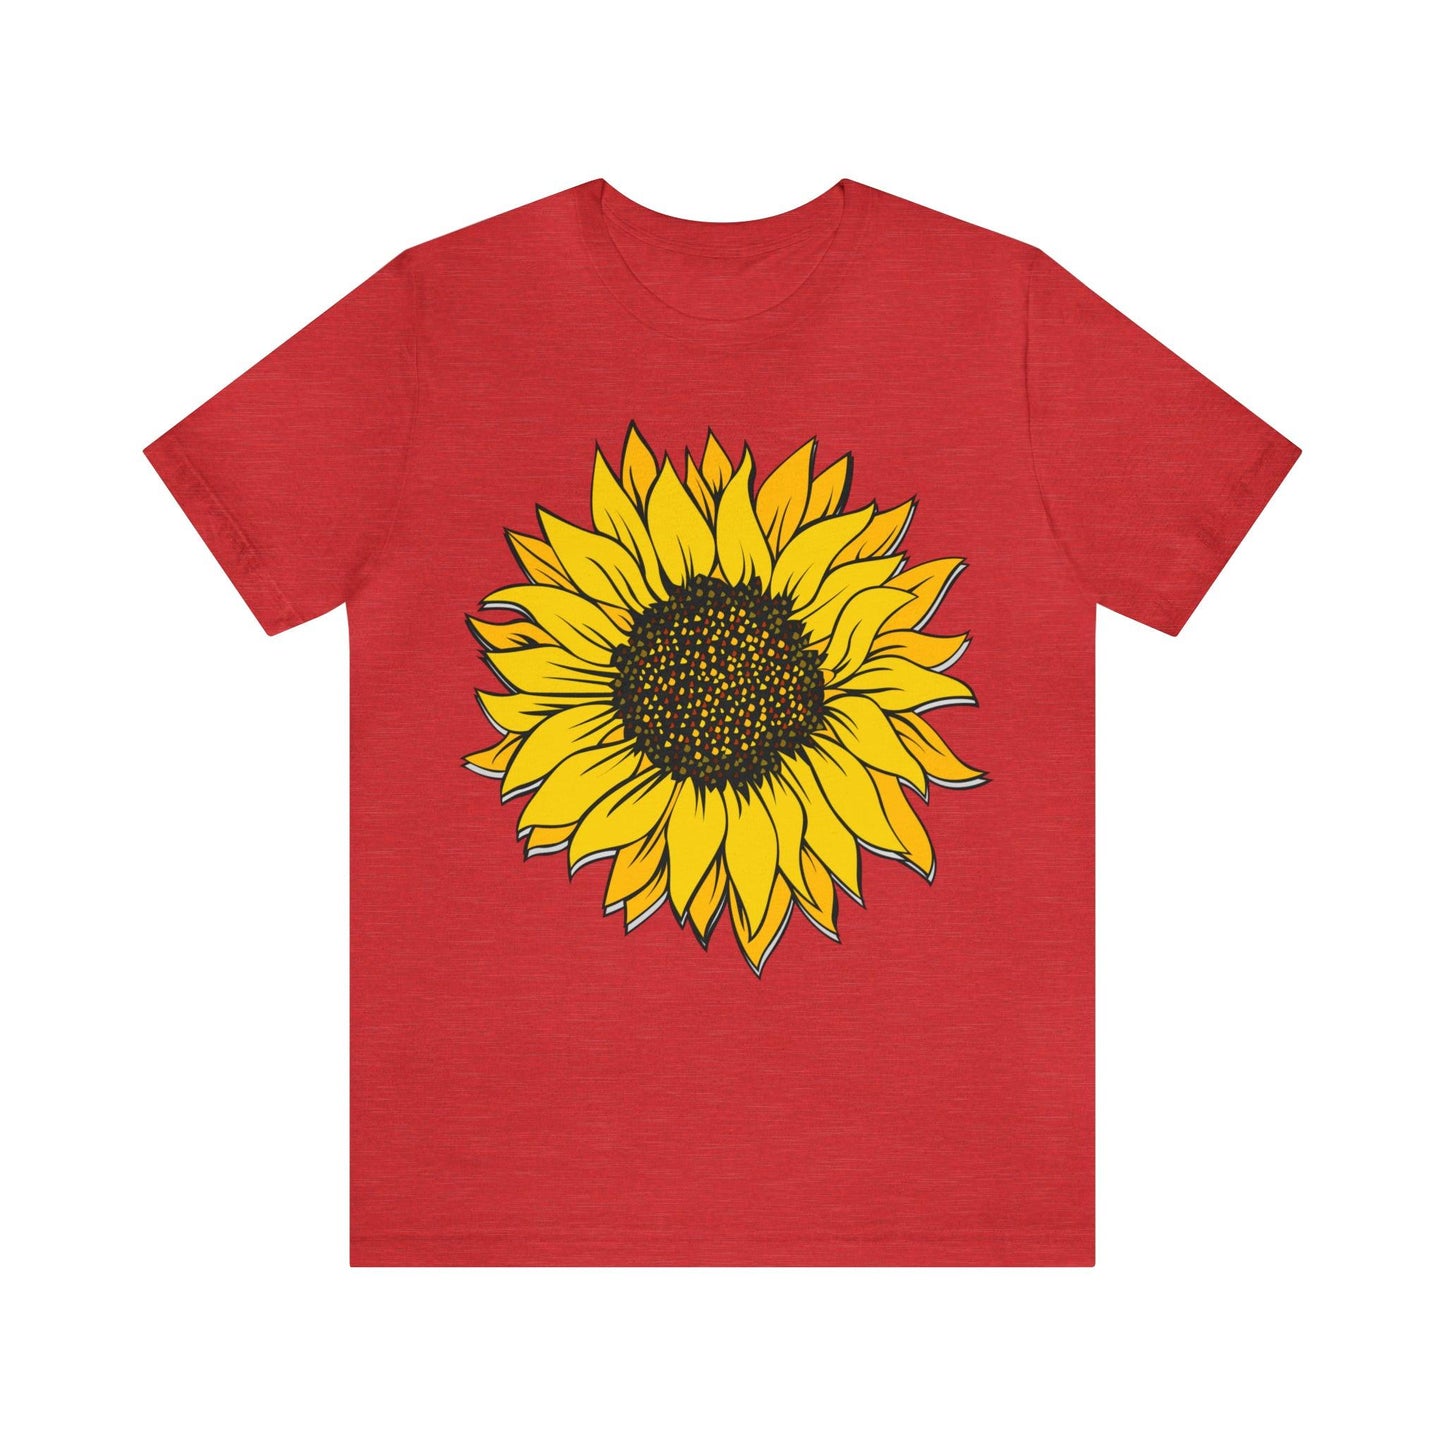 Sunflower Shirt, Floral Tee Shirt, Flower Shirt, Garden Shirt, Womens Fall Summer Shirt Sunshine Tee, Gift for Gardener, Nature lover shirt - Giftsmojo